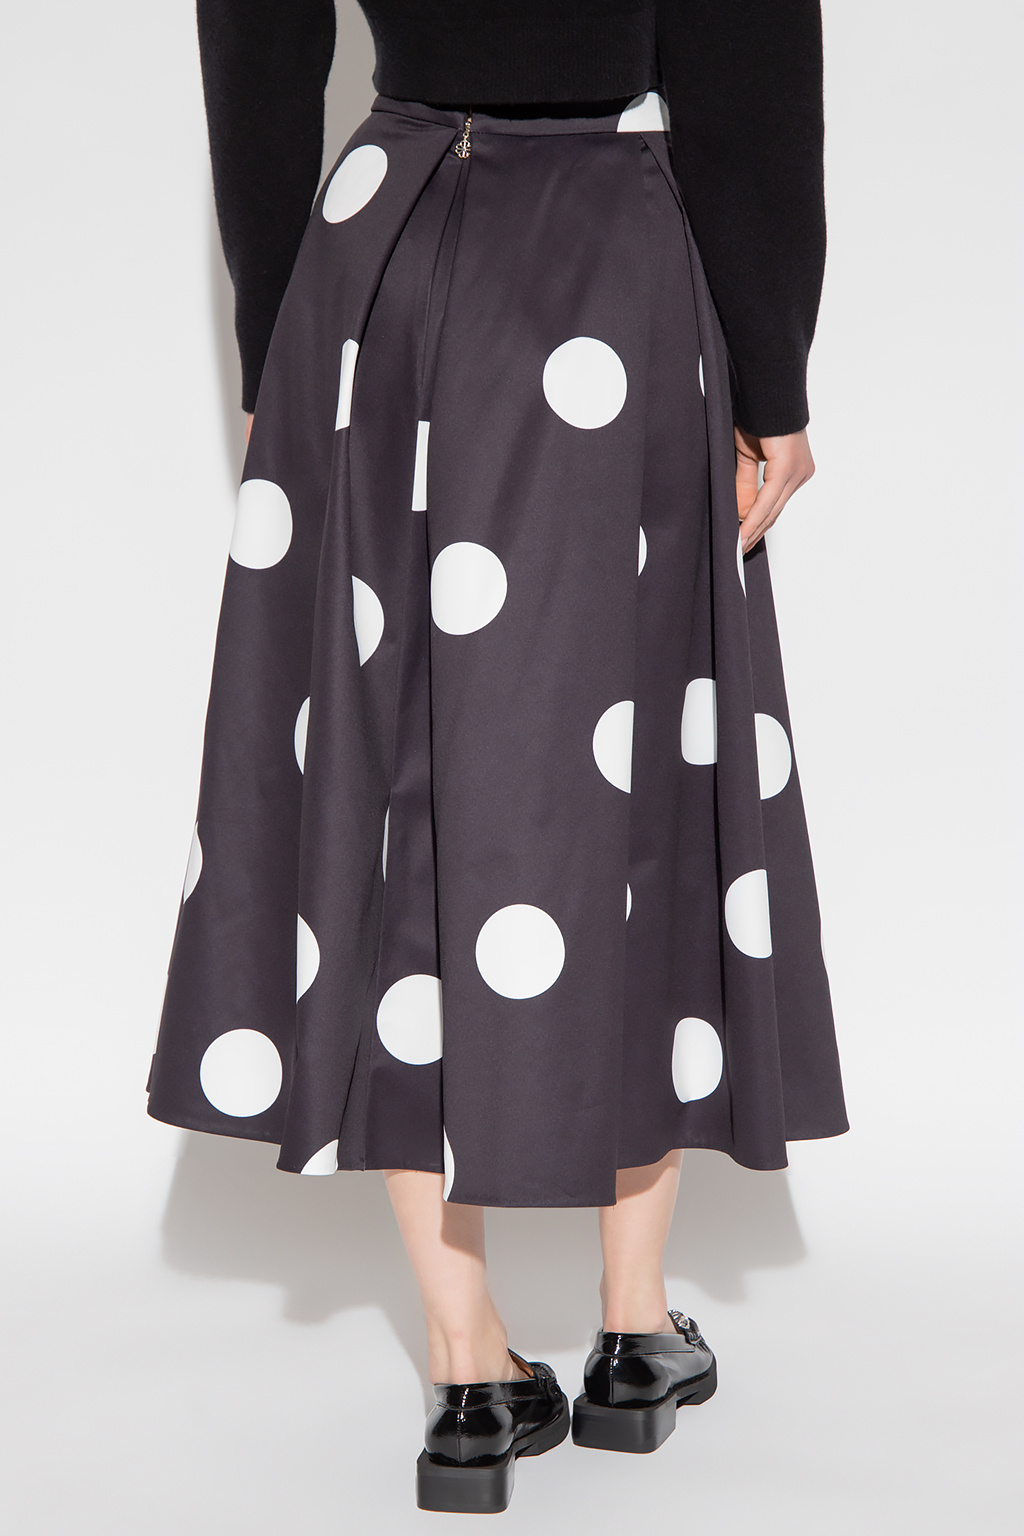 Kate Spade Skirt with polka dot pattern, Women's Clothing